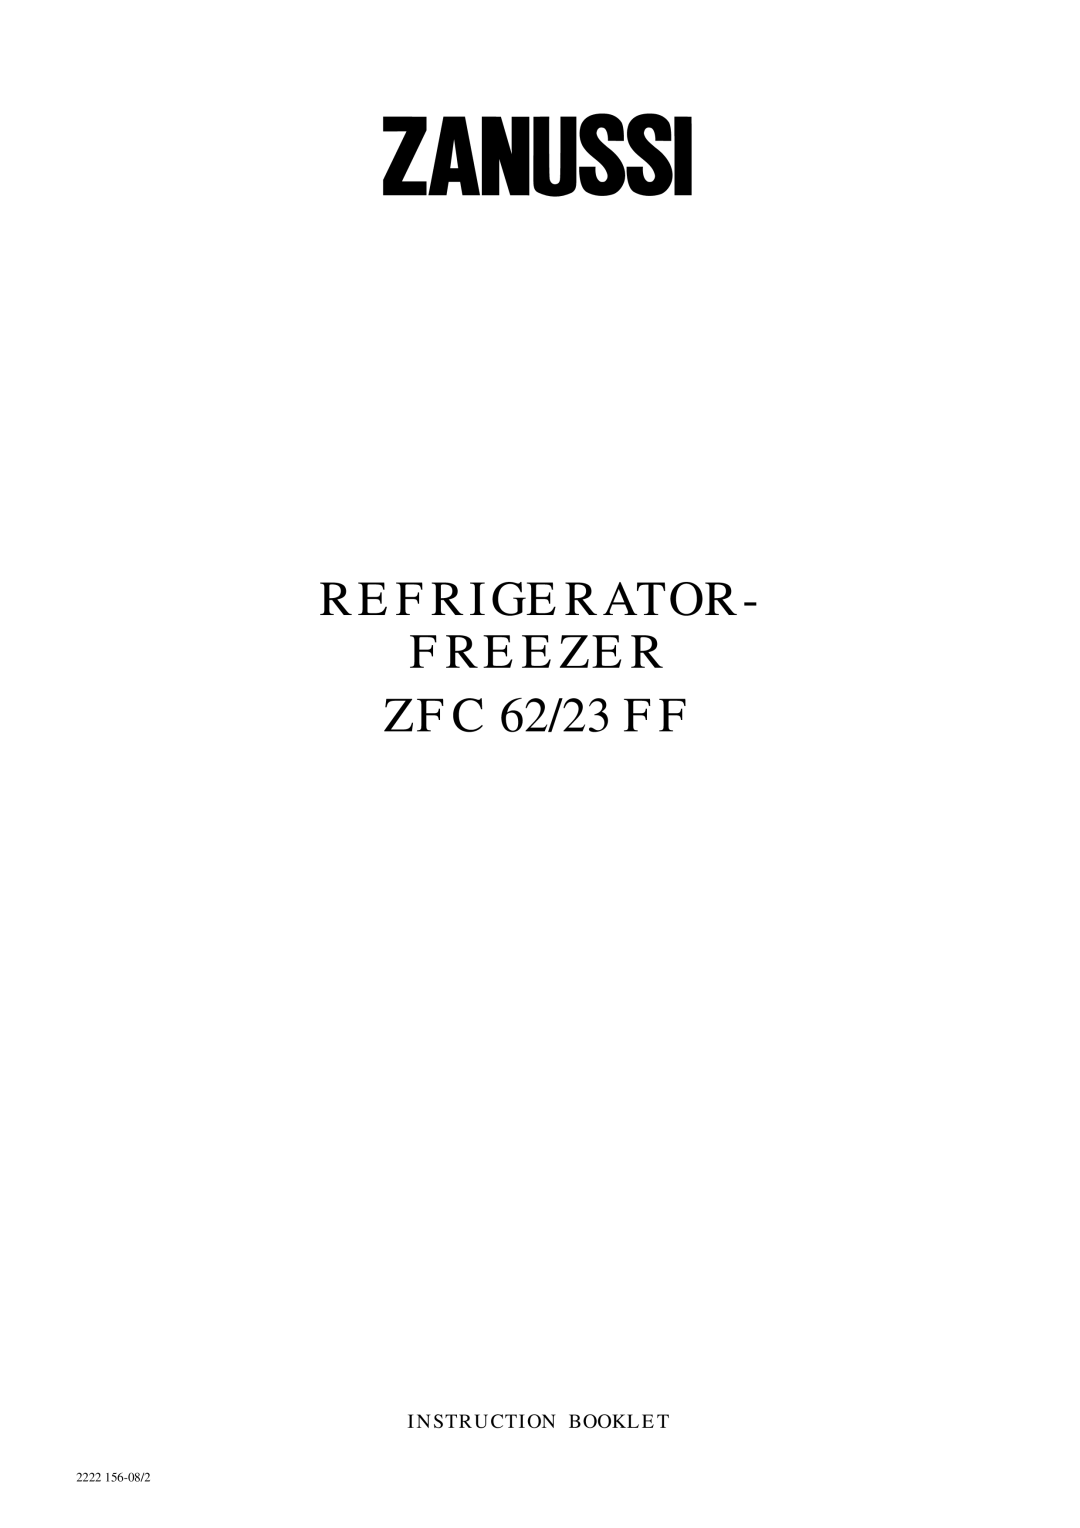 Zanussi manual REFRIGERATOR FREEZER ZFC 62/23 FF, Instruction Booklet, 2222 156-08/2 